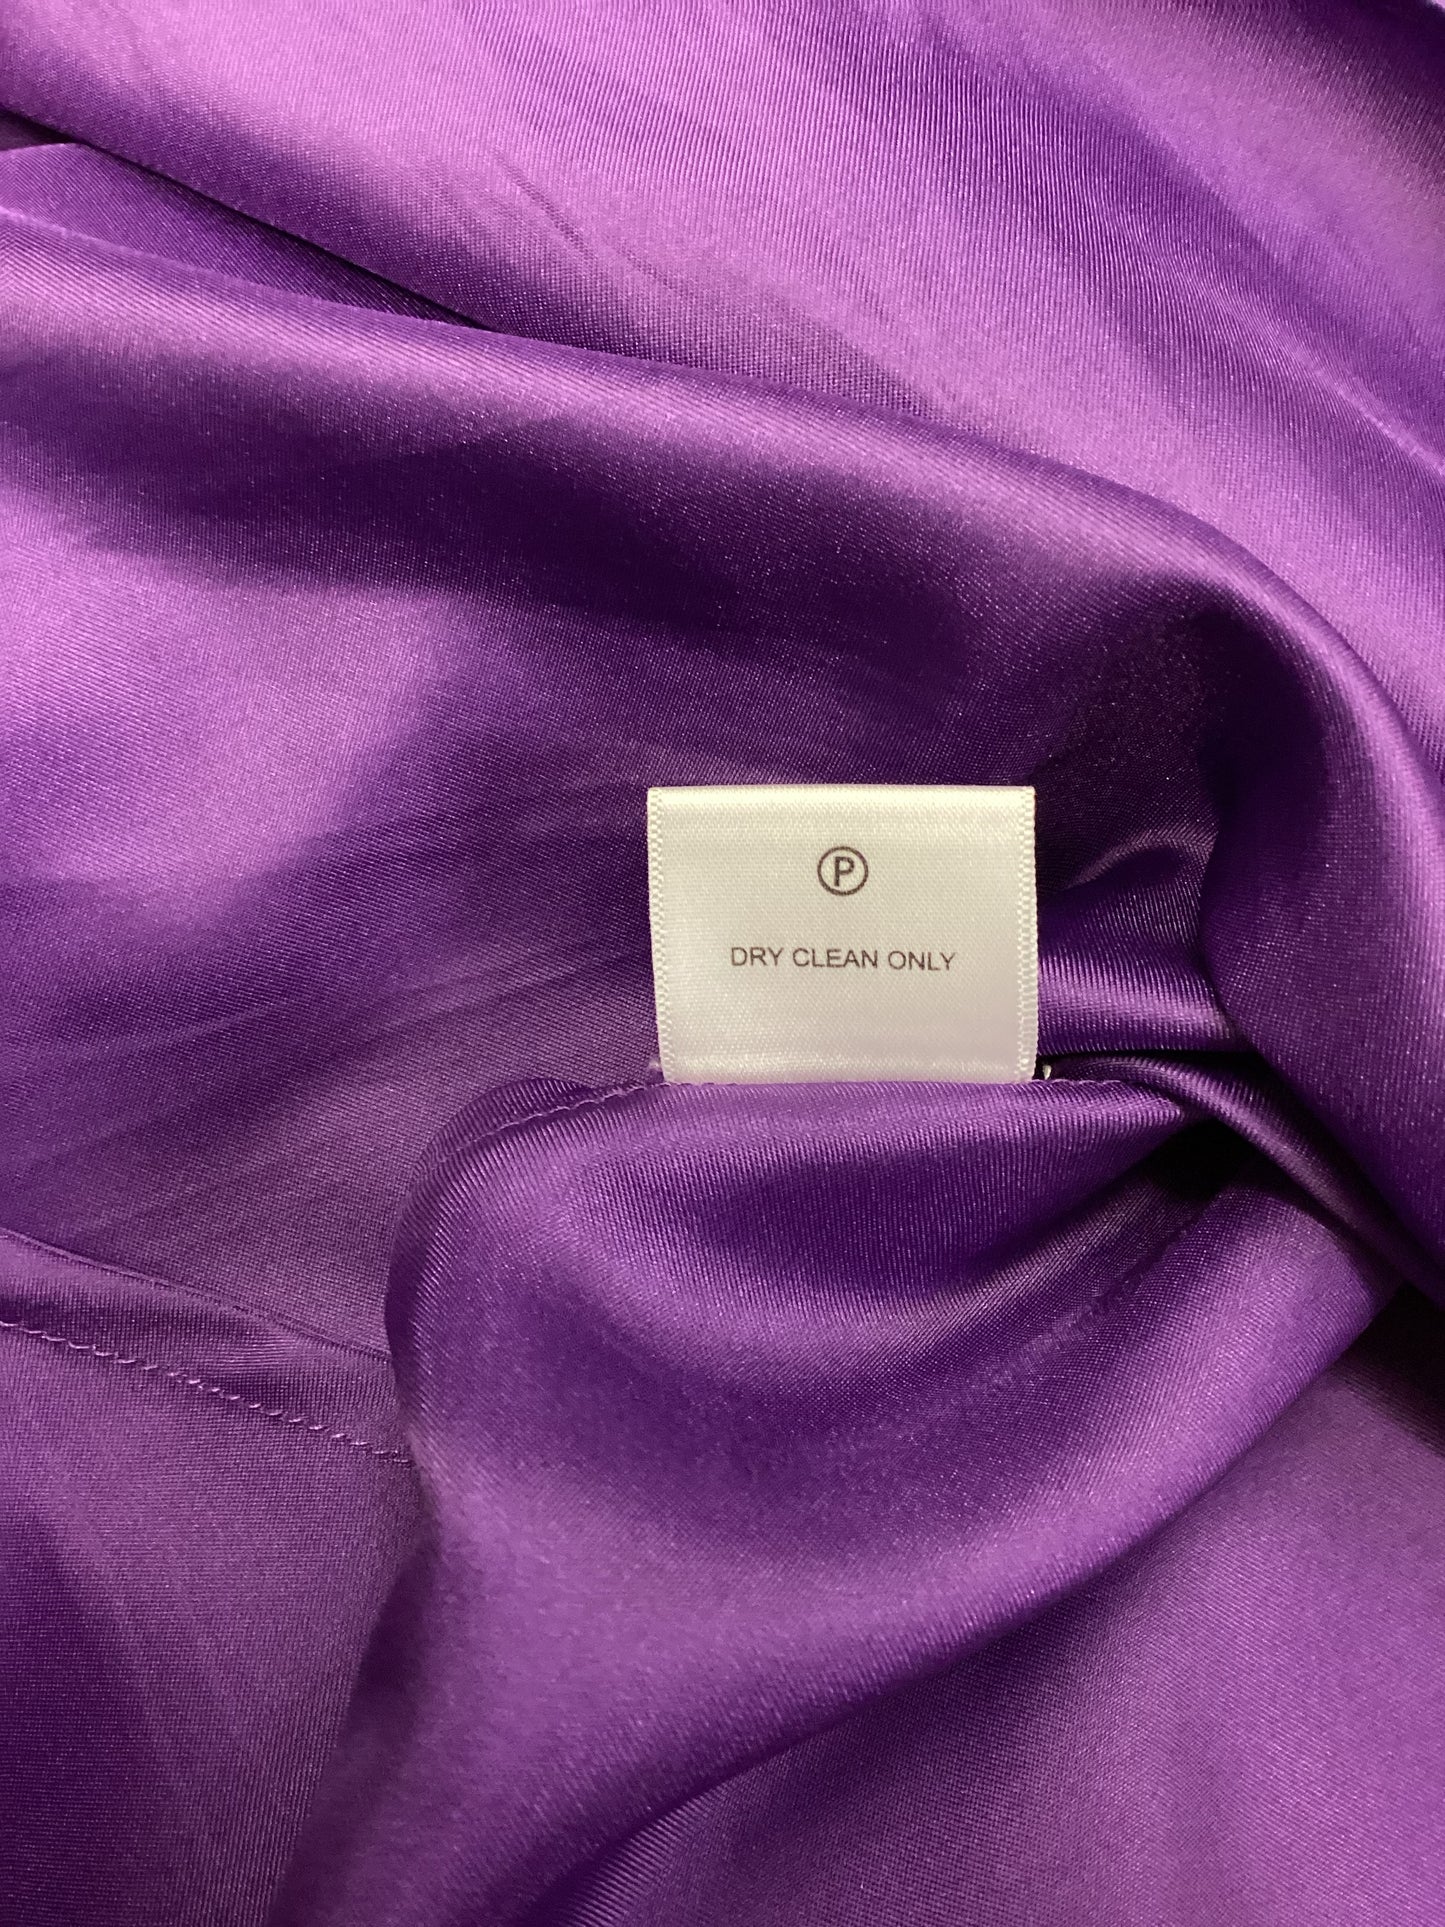 Hobbs Purple Silk Dress with Slip Size 10